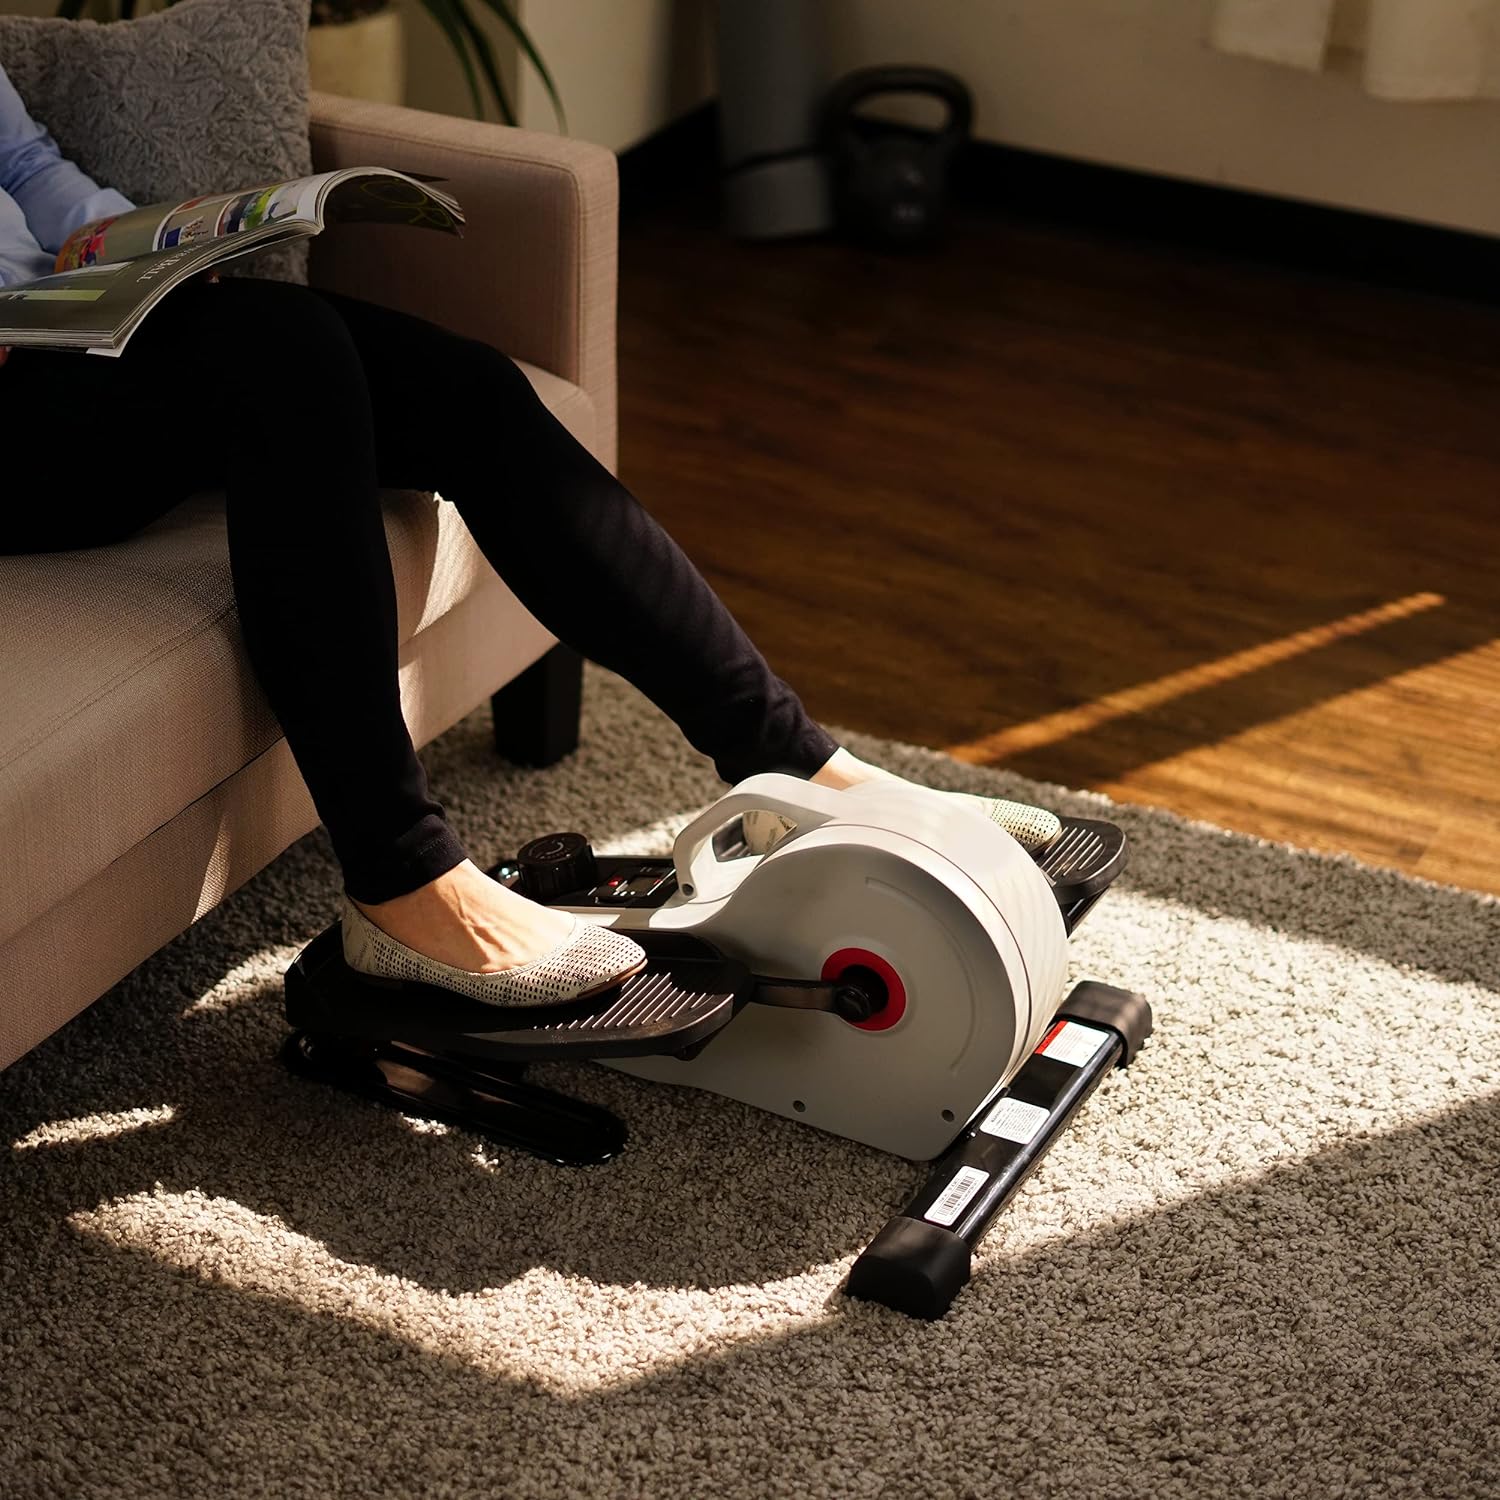 Sunny Health & Fitness Fully Assembled Magnetic Under Desk Elliptical Peddler, Portable Foot & Leg Pedal Exerciser (White\/Pink)